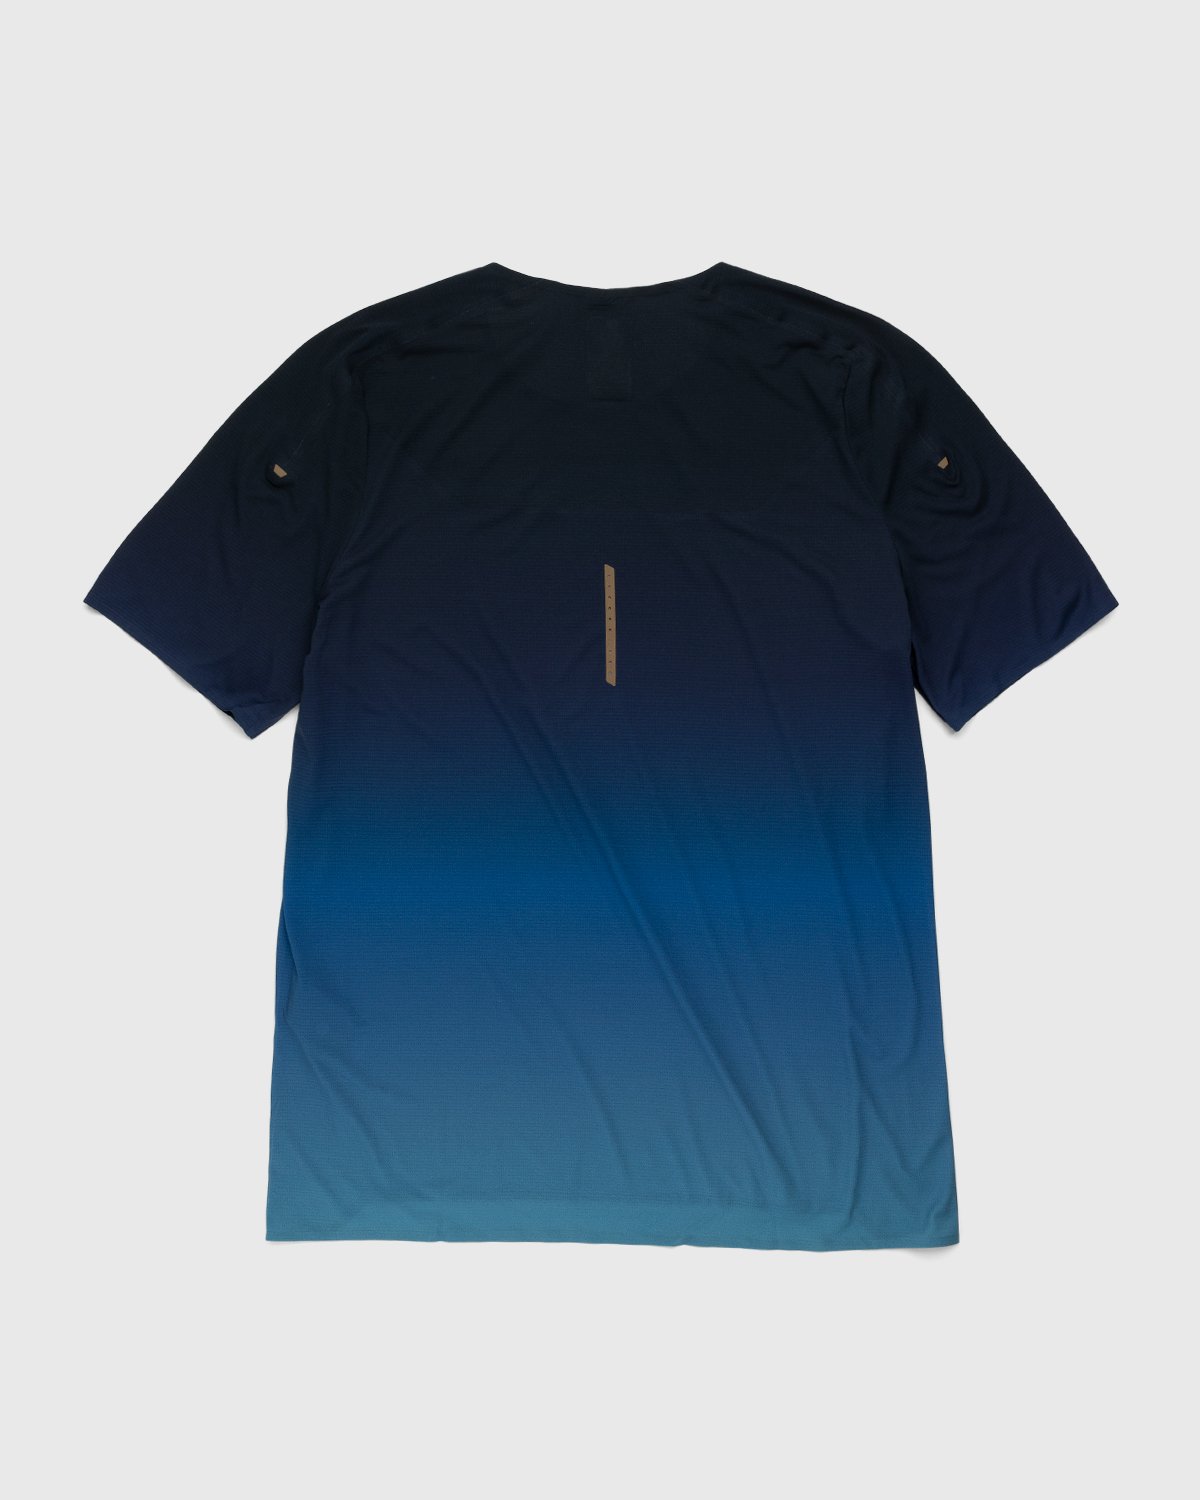 Loewe x On - Men's Performance T-Shirt Gradient Blue - Clothing - Blue - Image 2